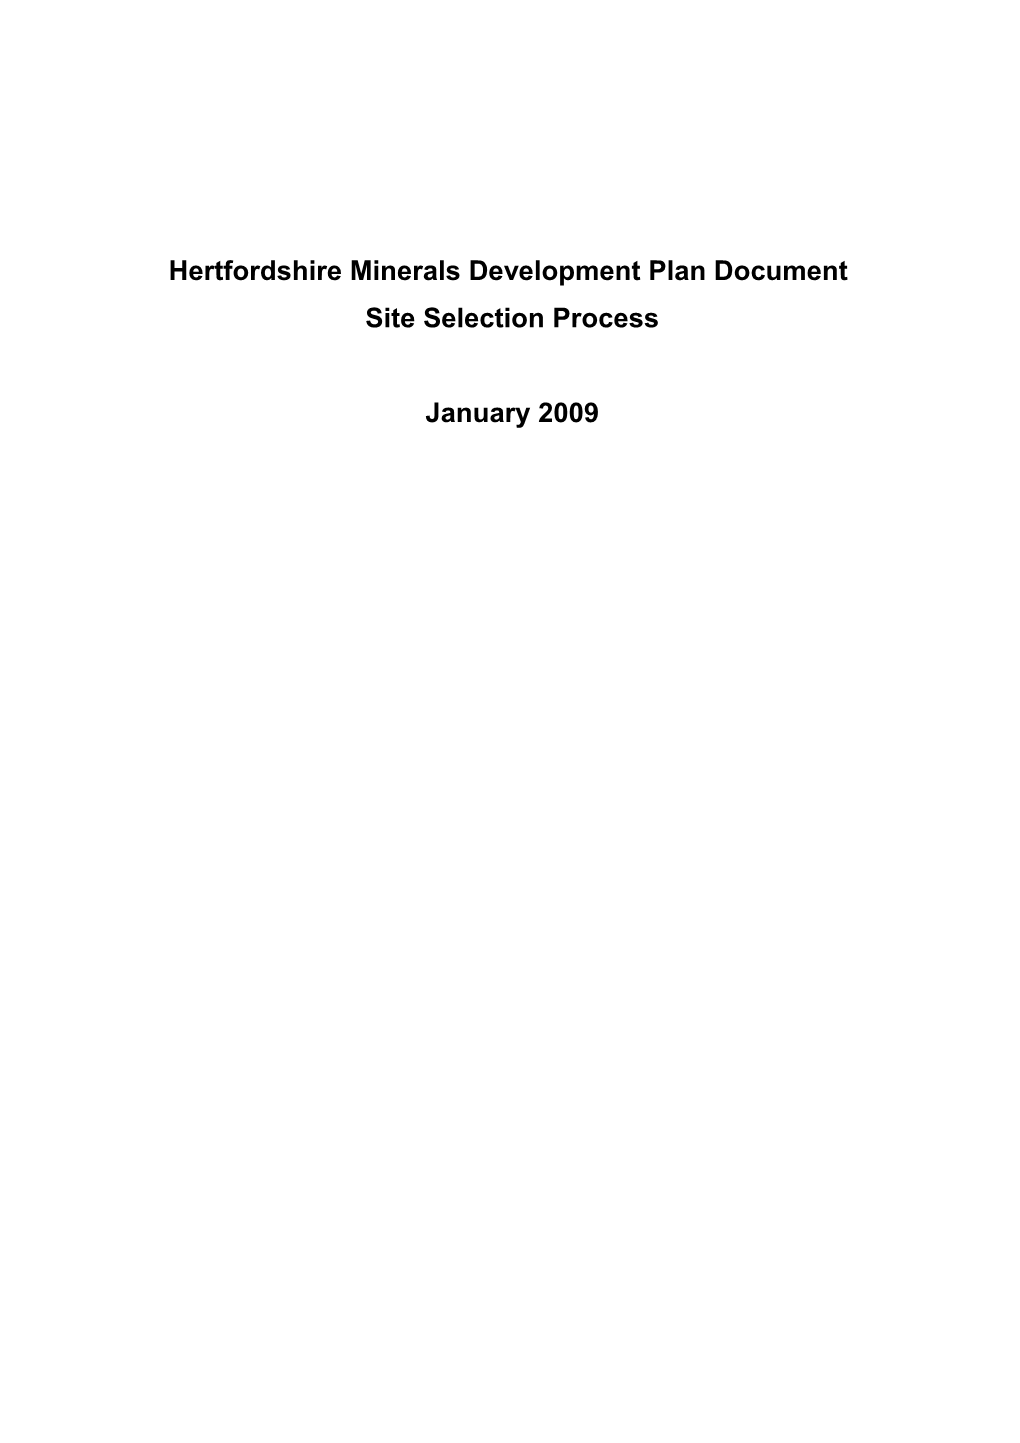 Hertfordshire Minerals Local Plan Review